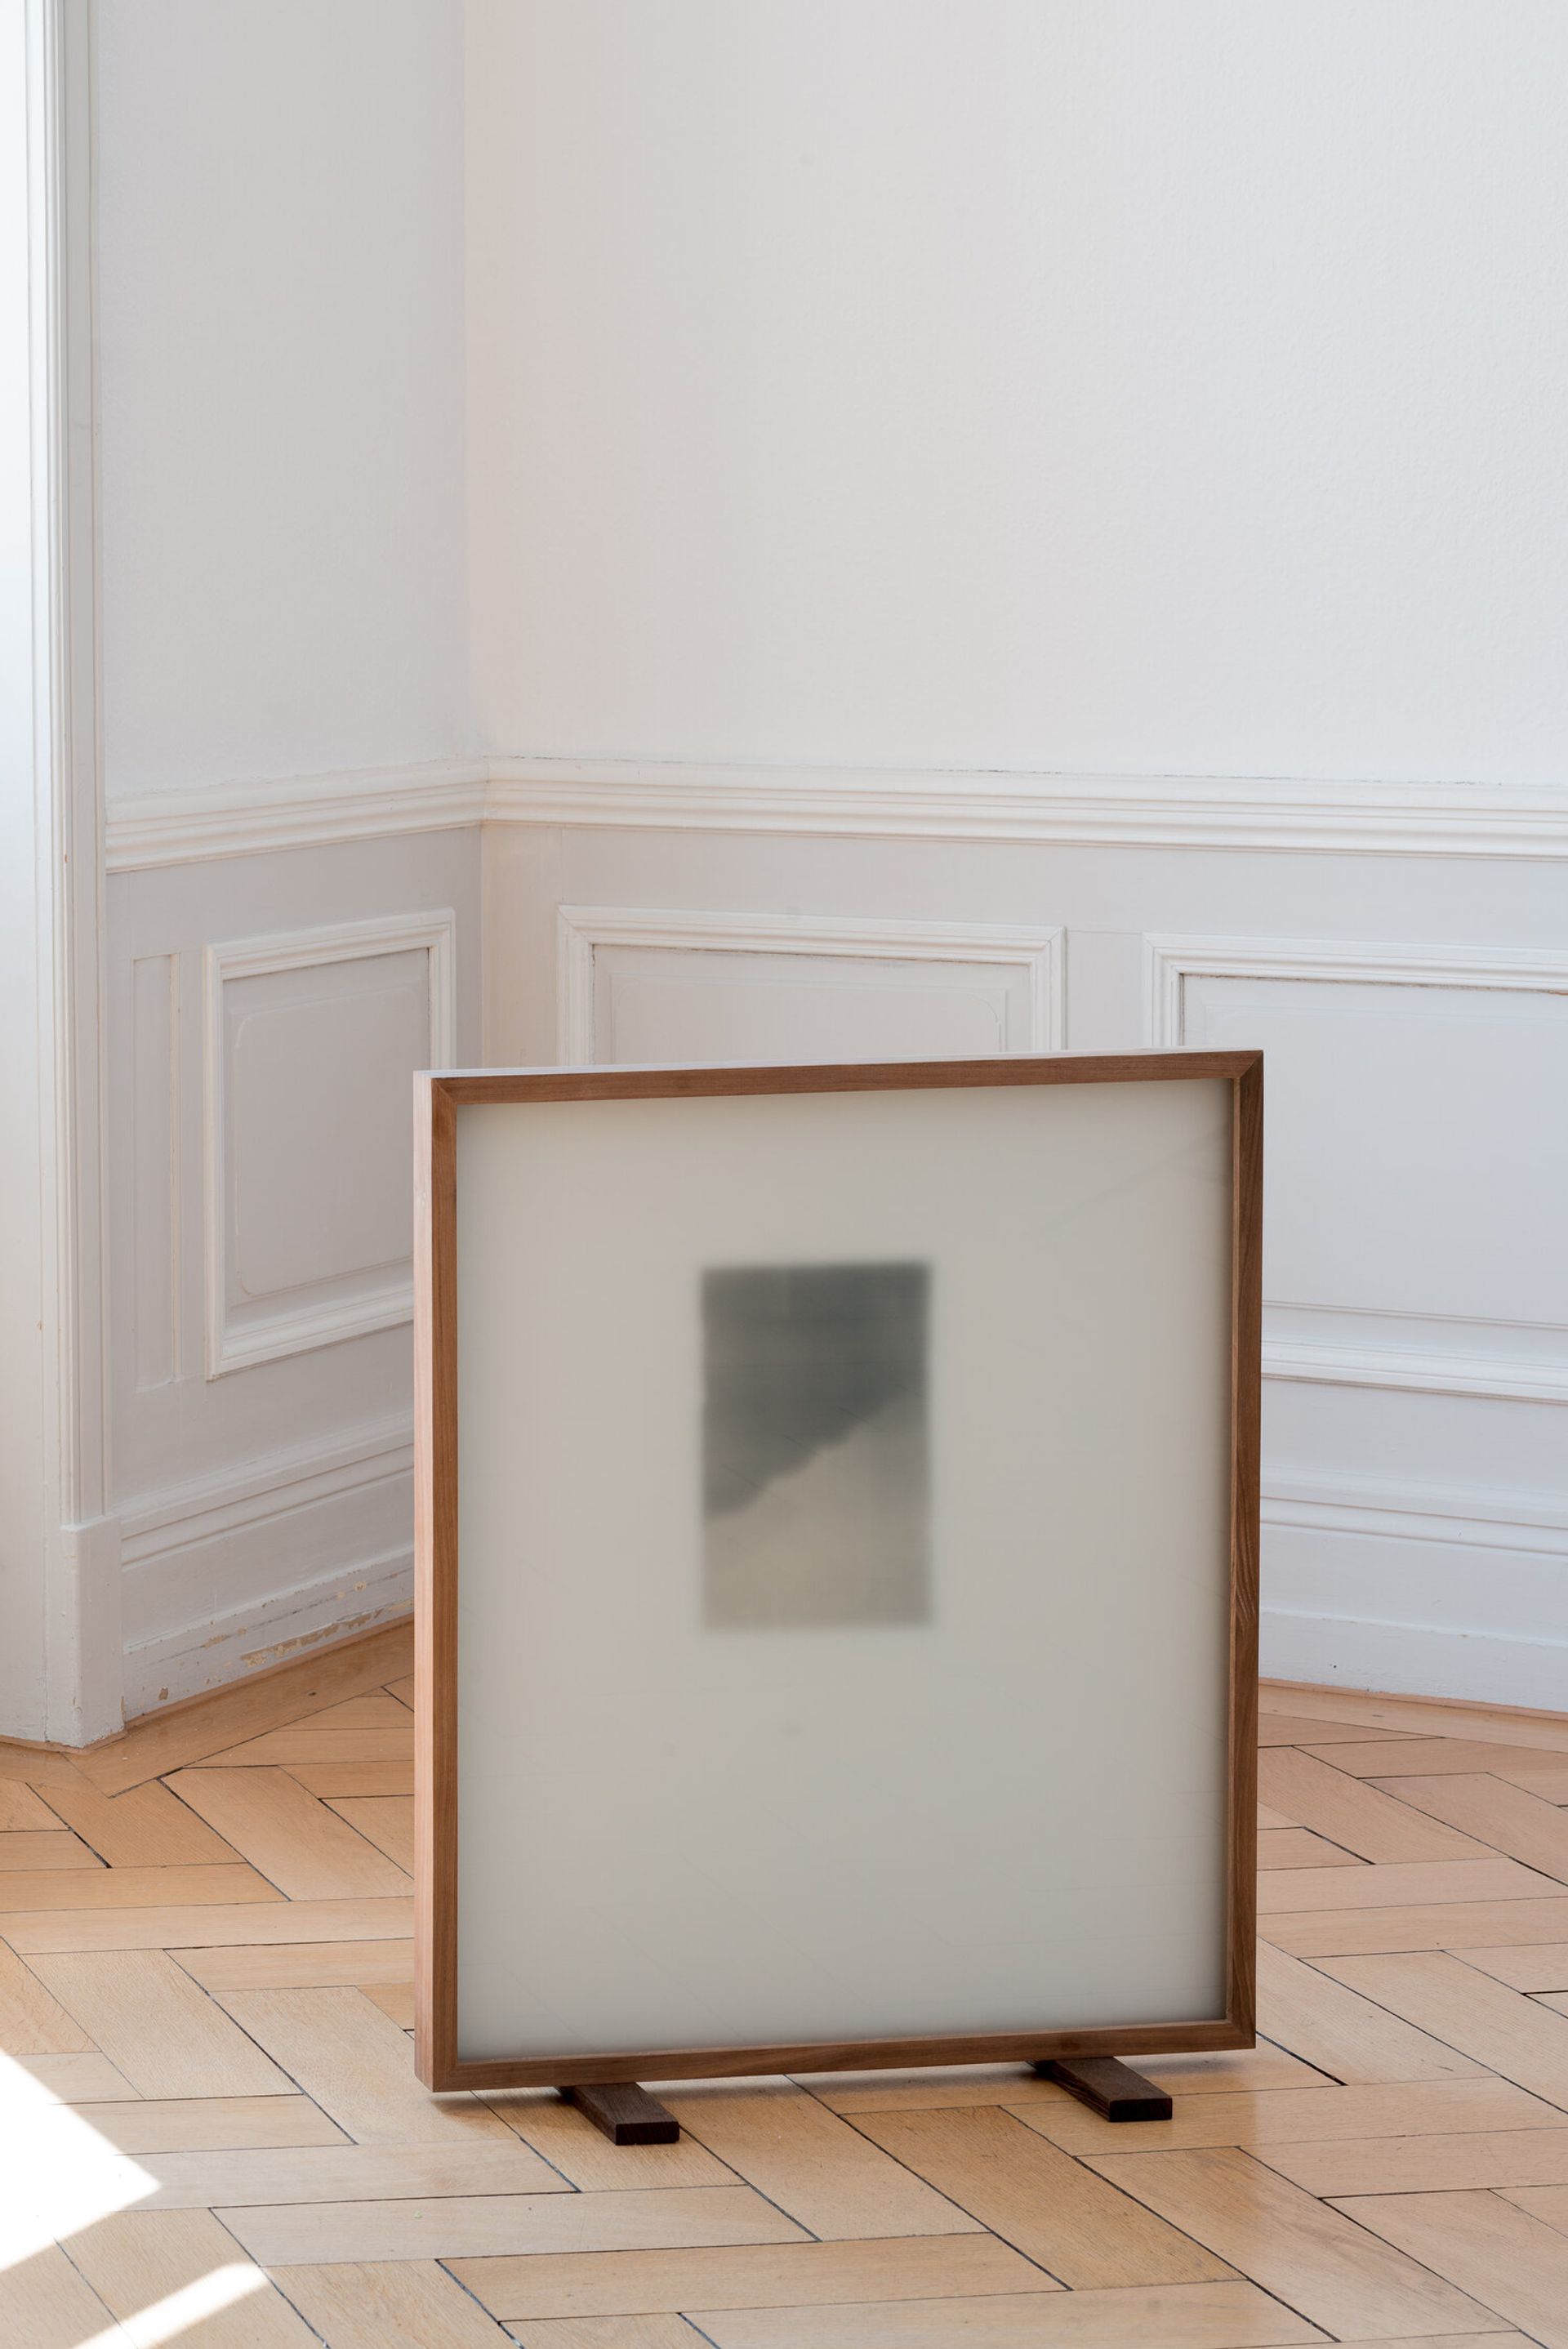 Malte Zenses, nackt, 2017, UV-print, walnut frame with opalglass, 65 × 72 cm